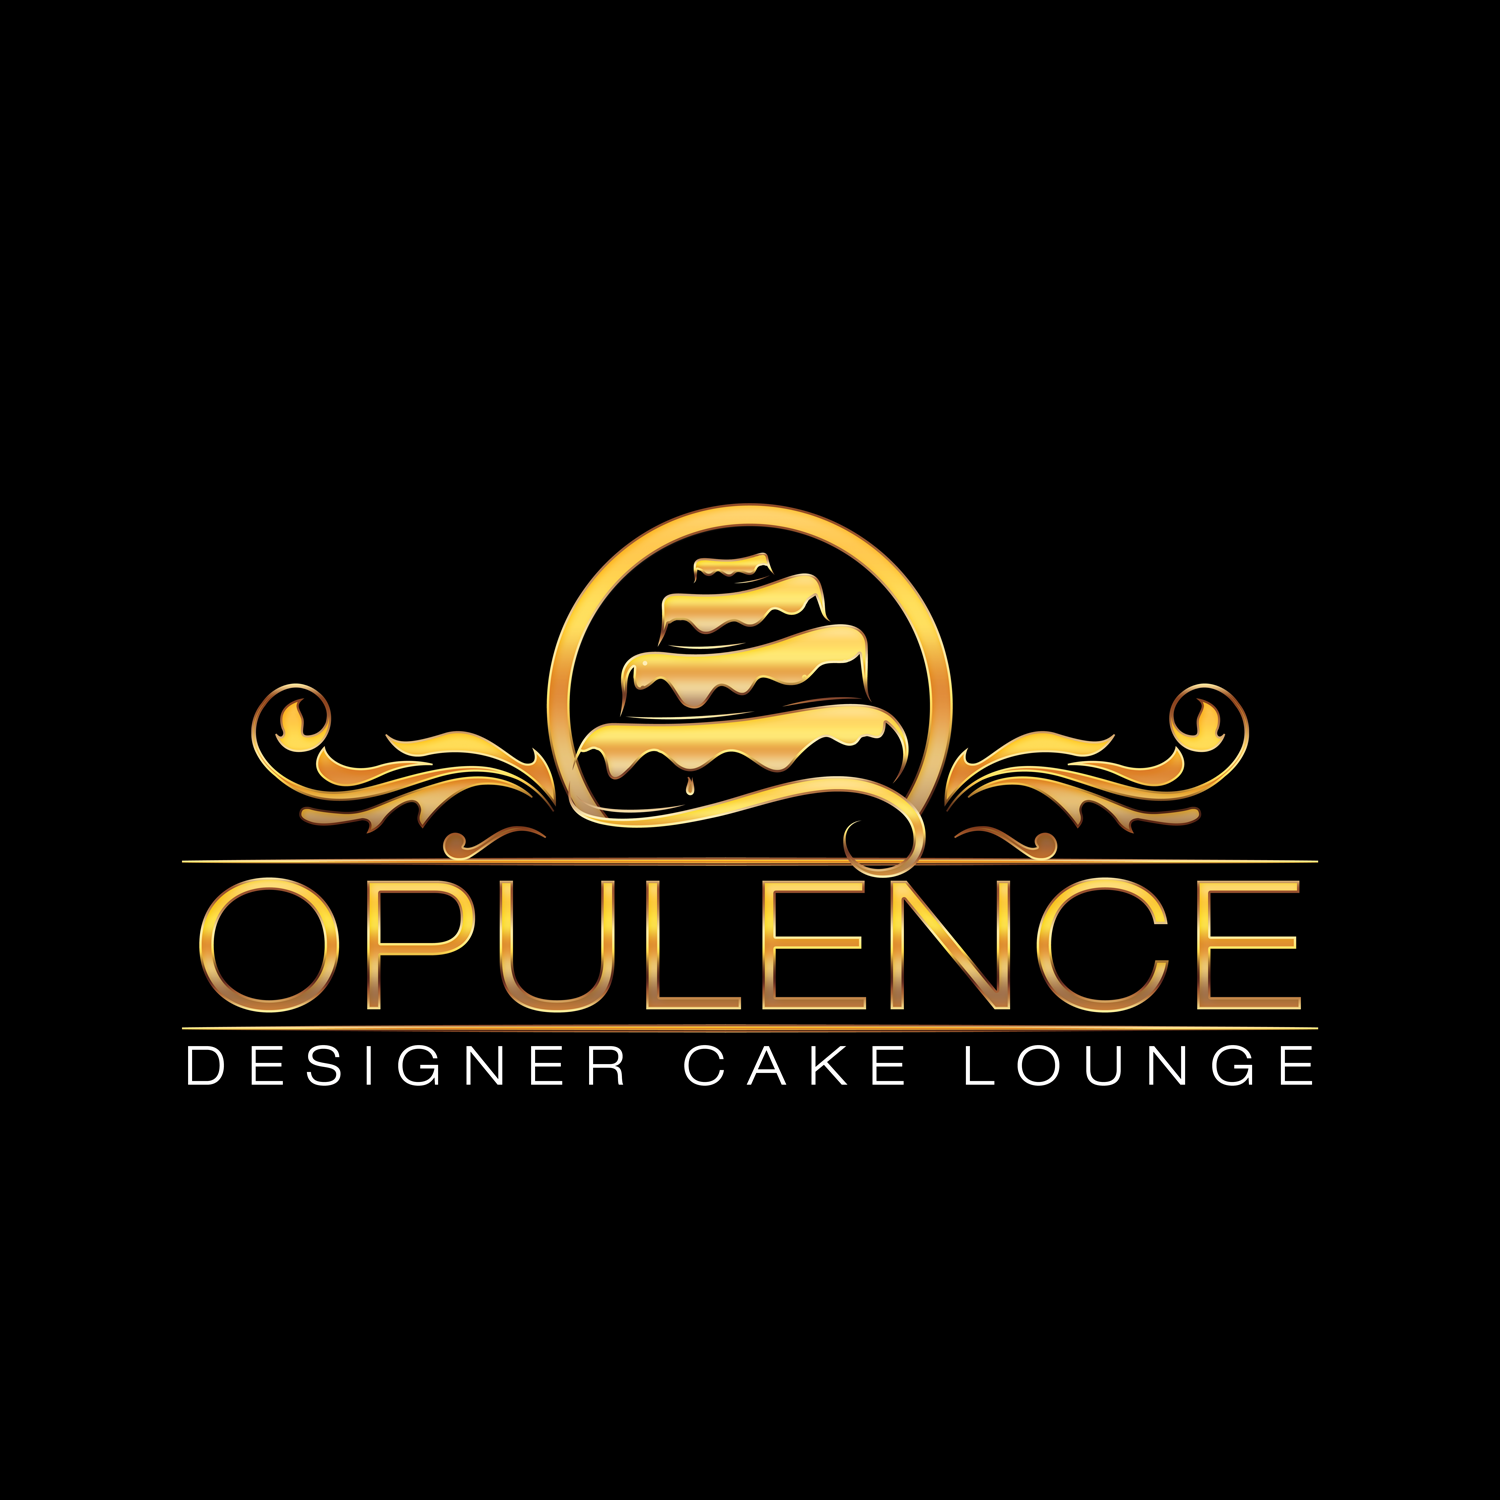 Opulence